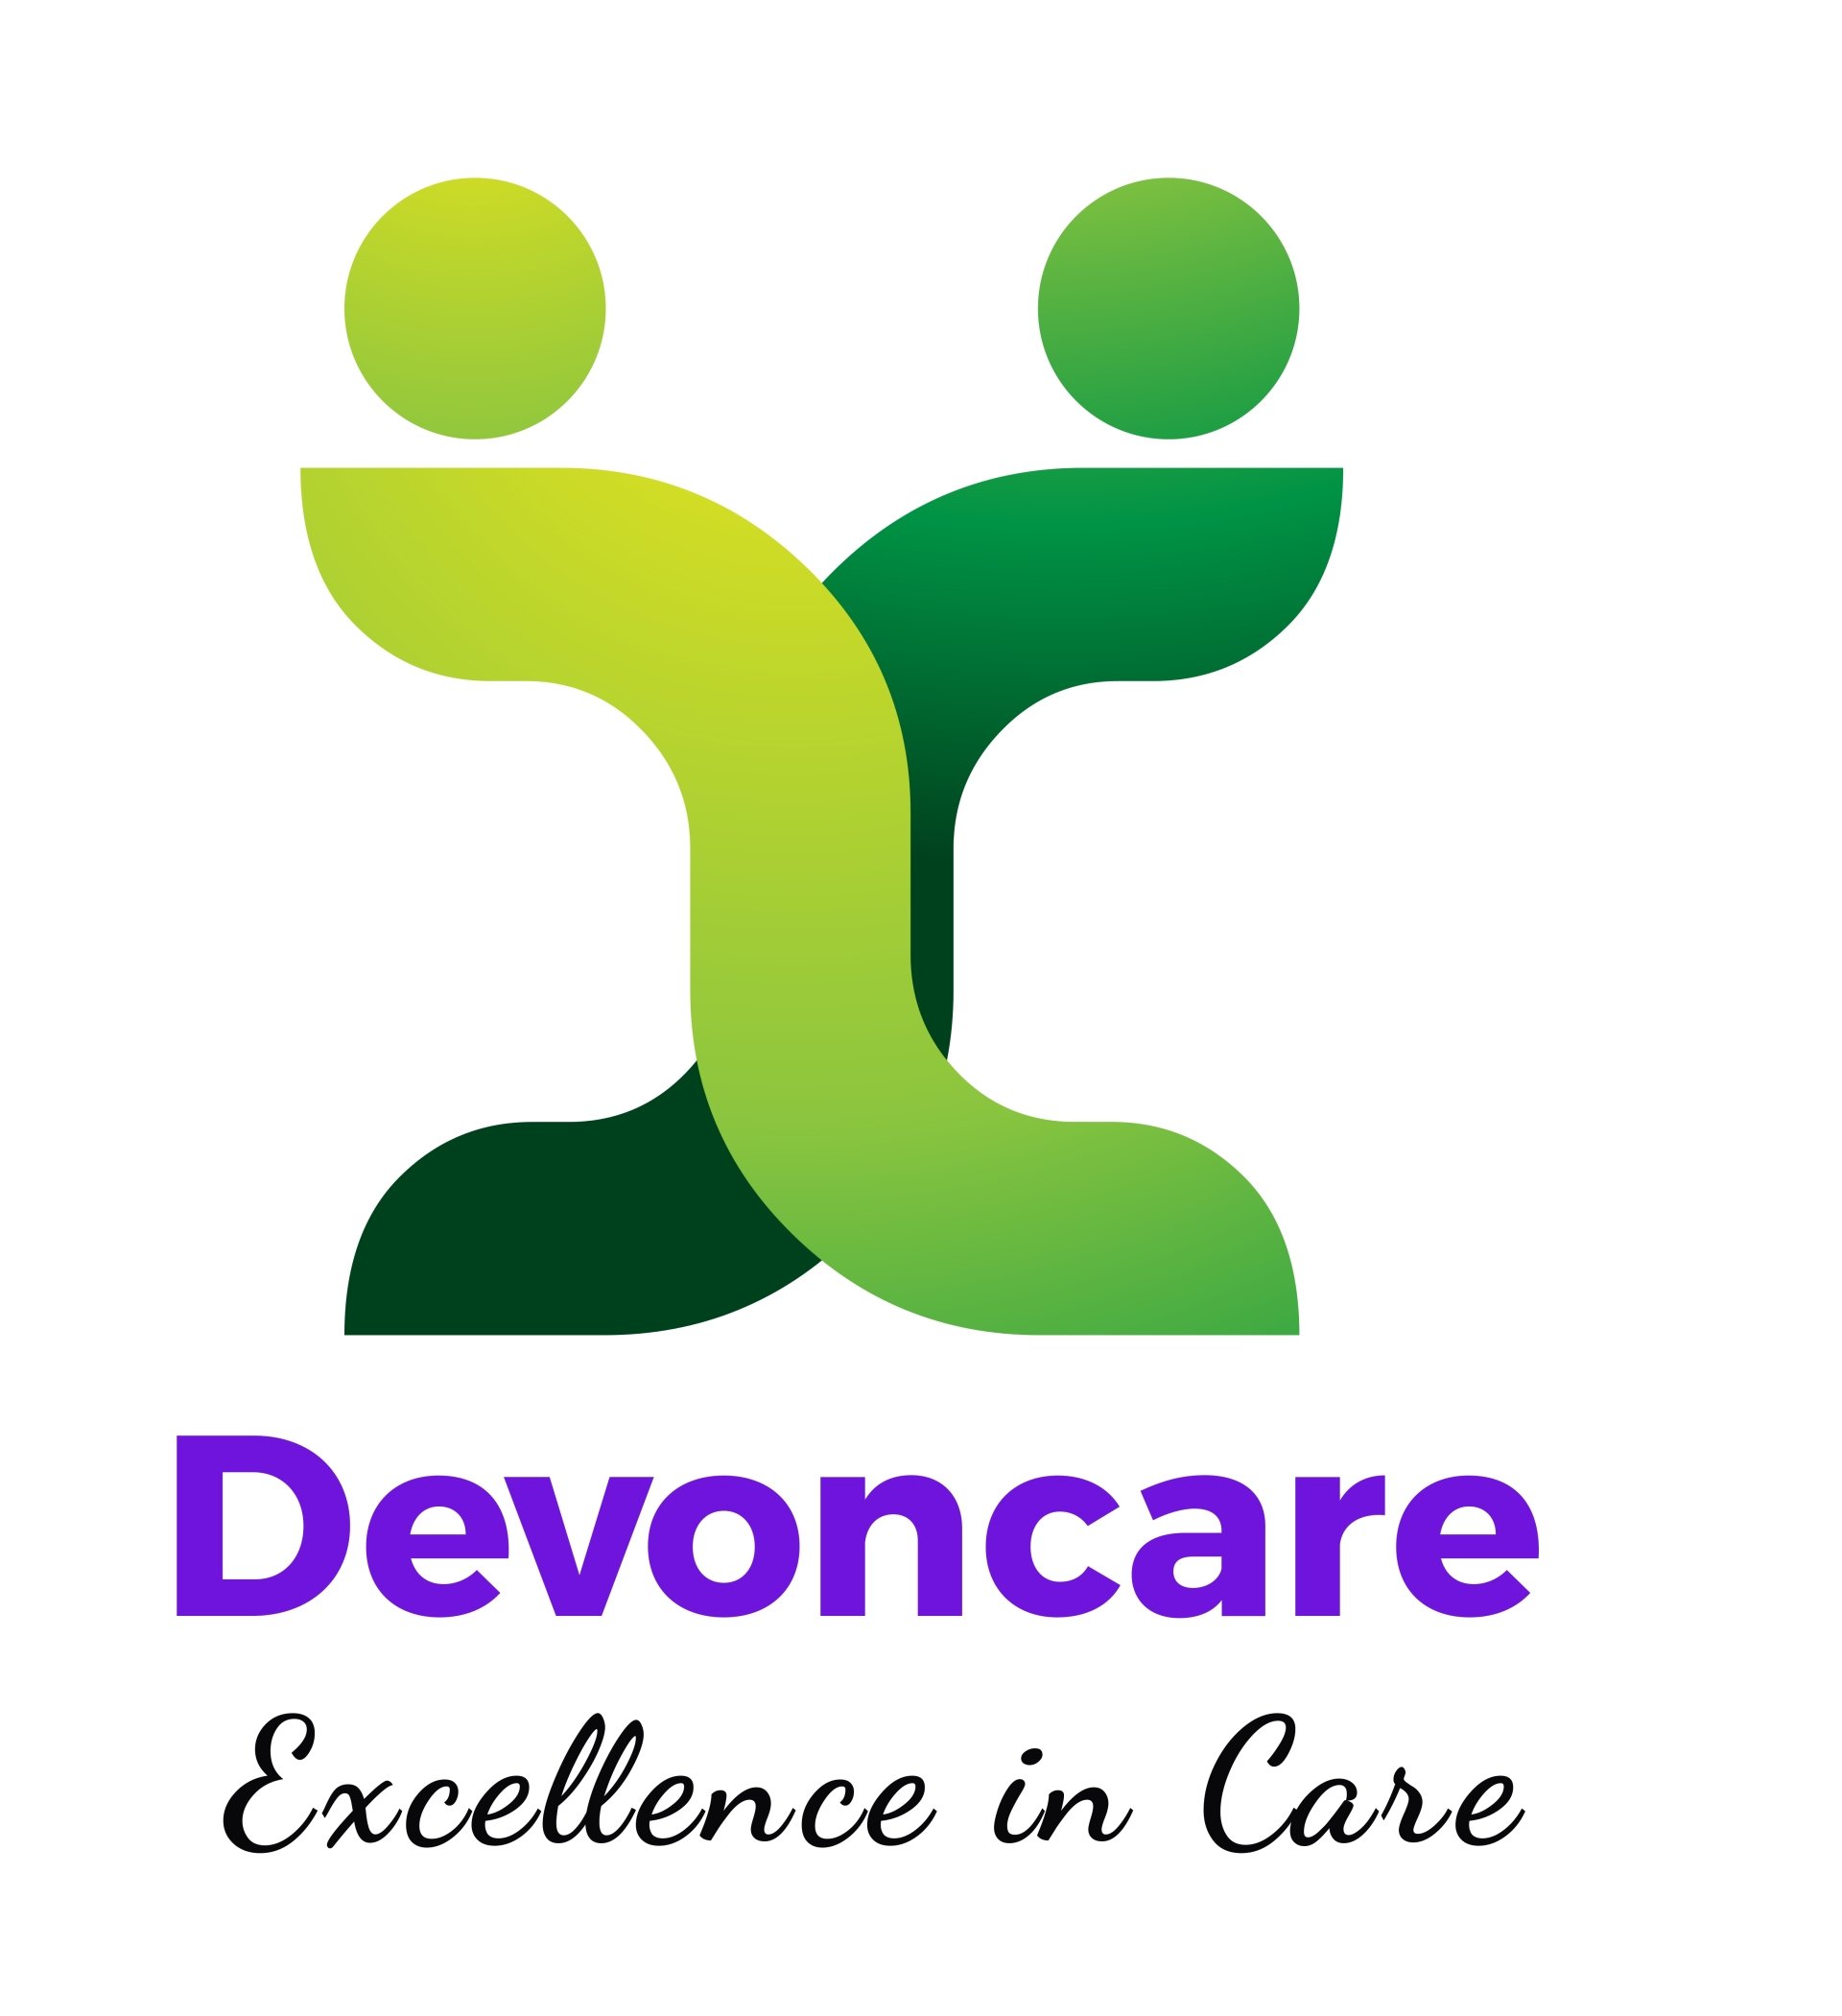 Logo of Devoncare Health Care Services In Plymouth, Devon